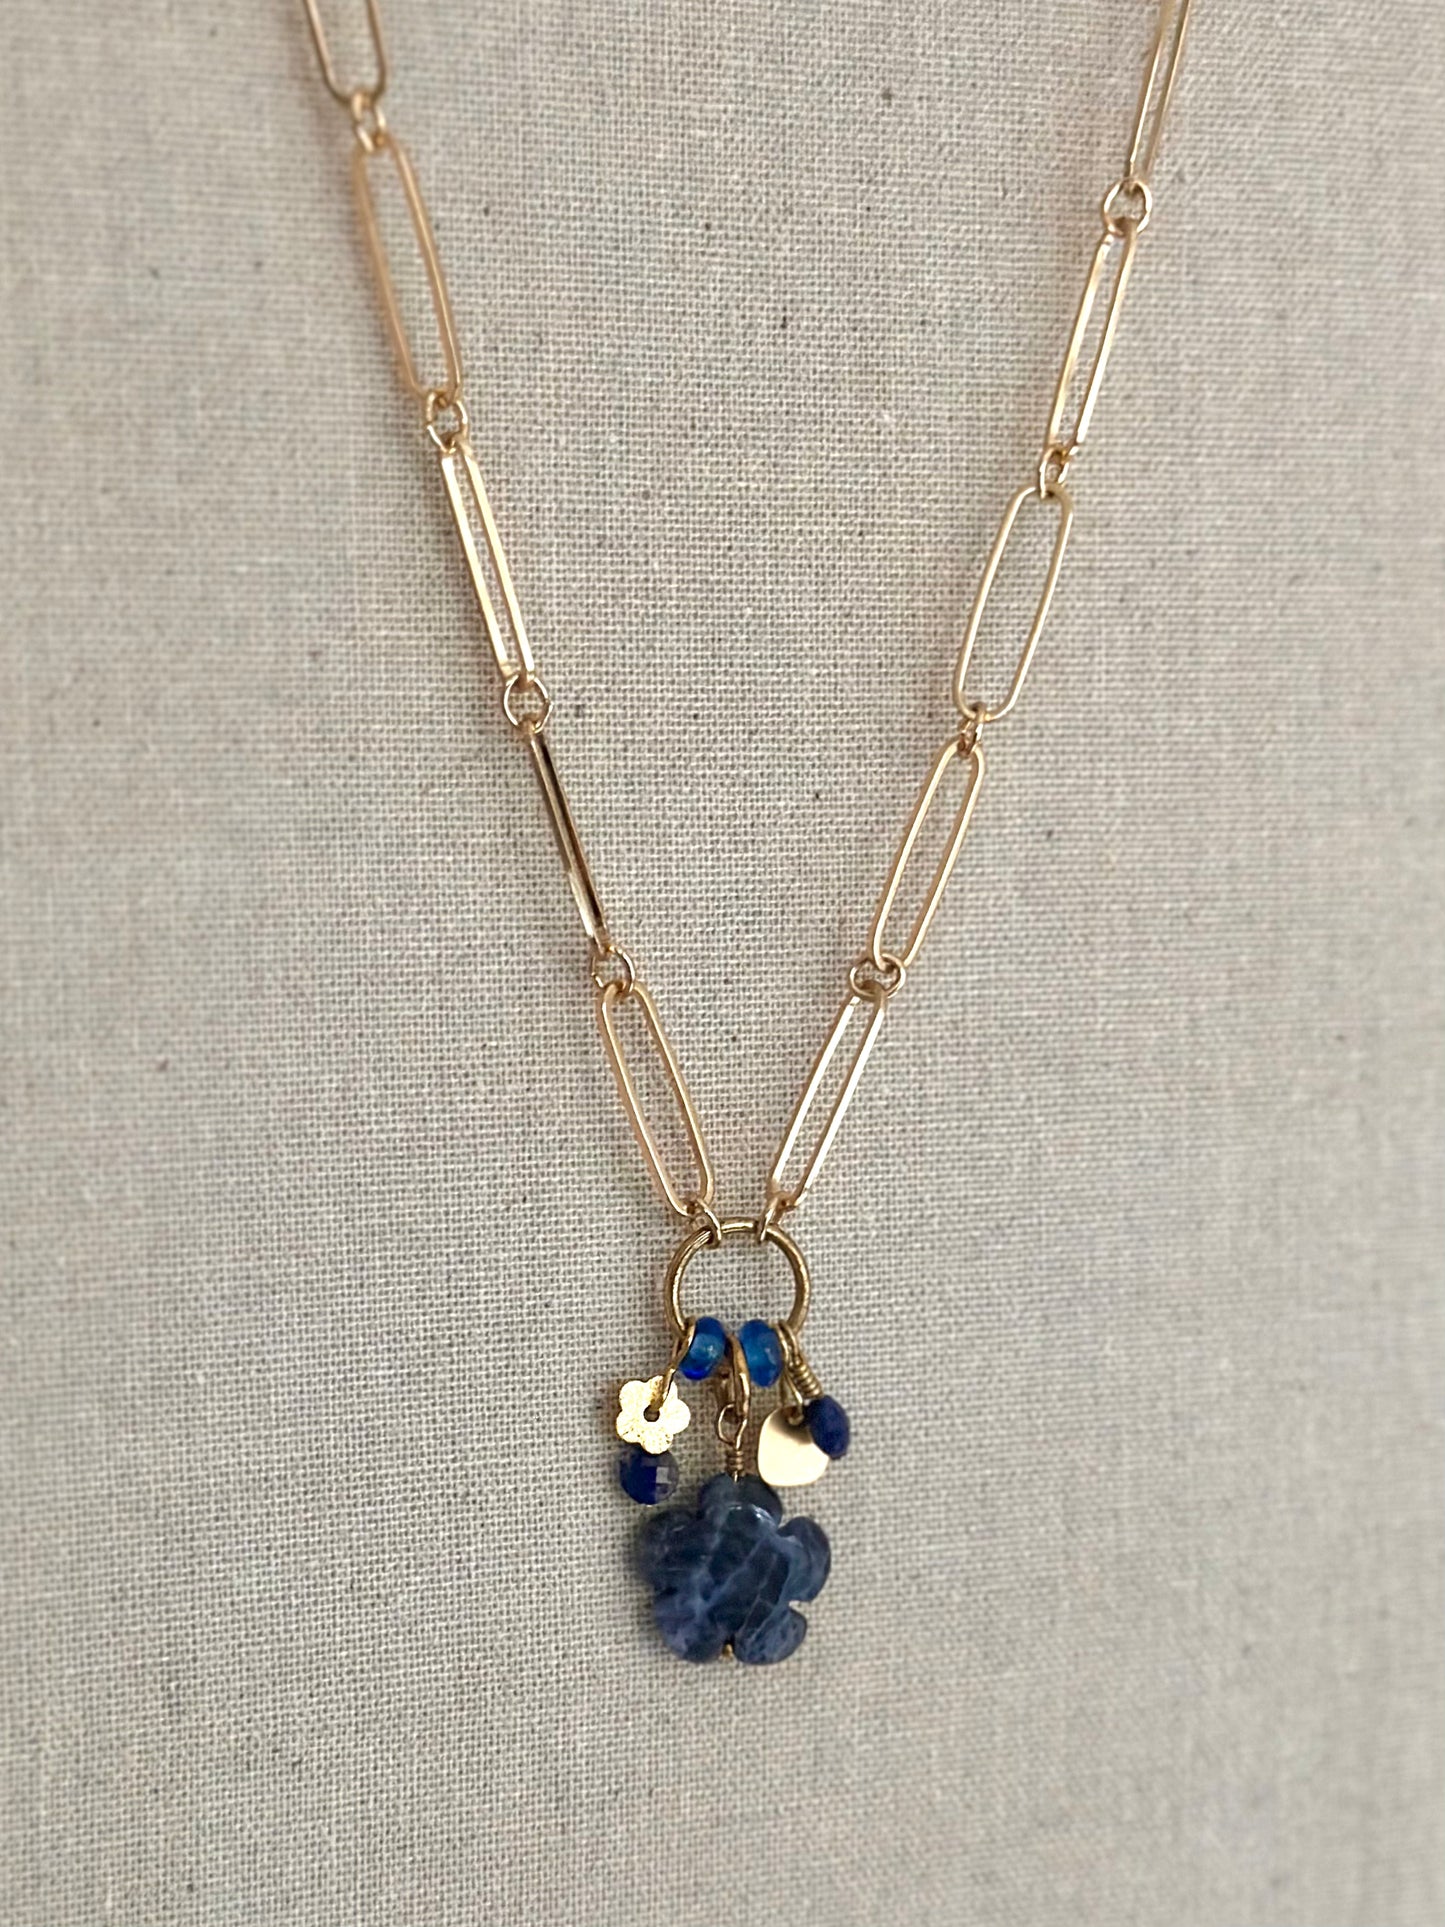 Blue tide necklace